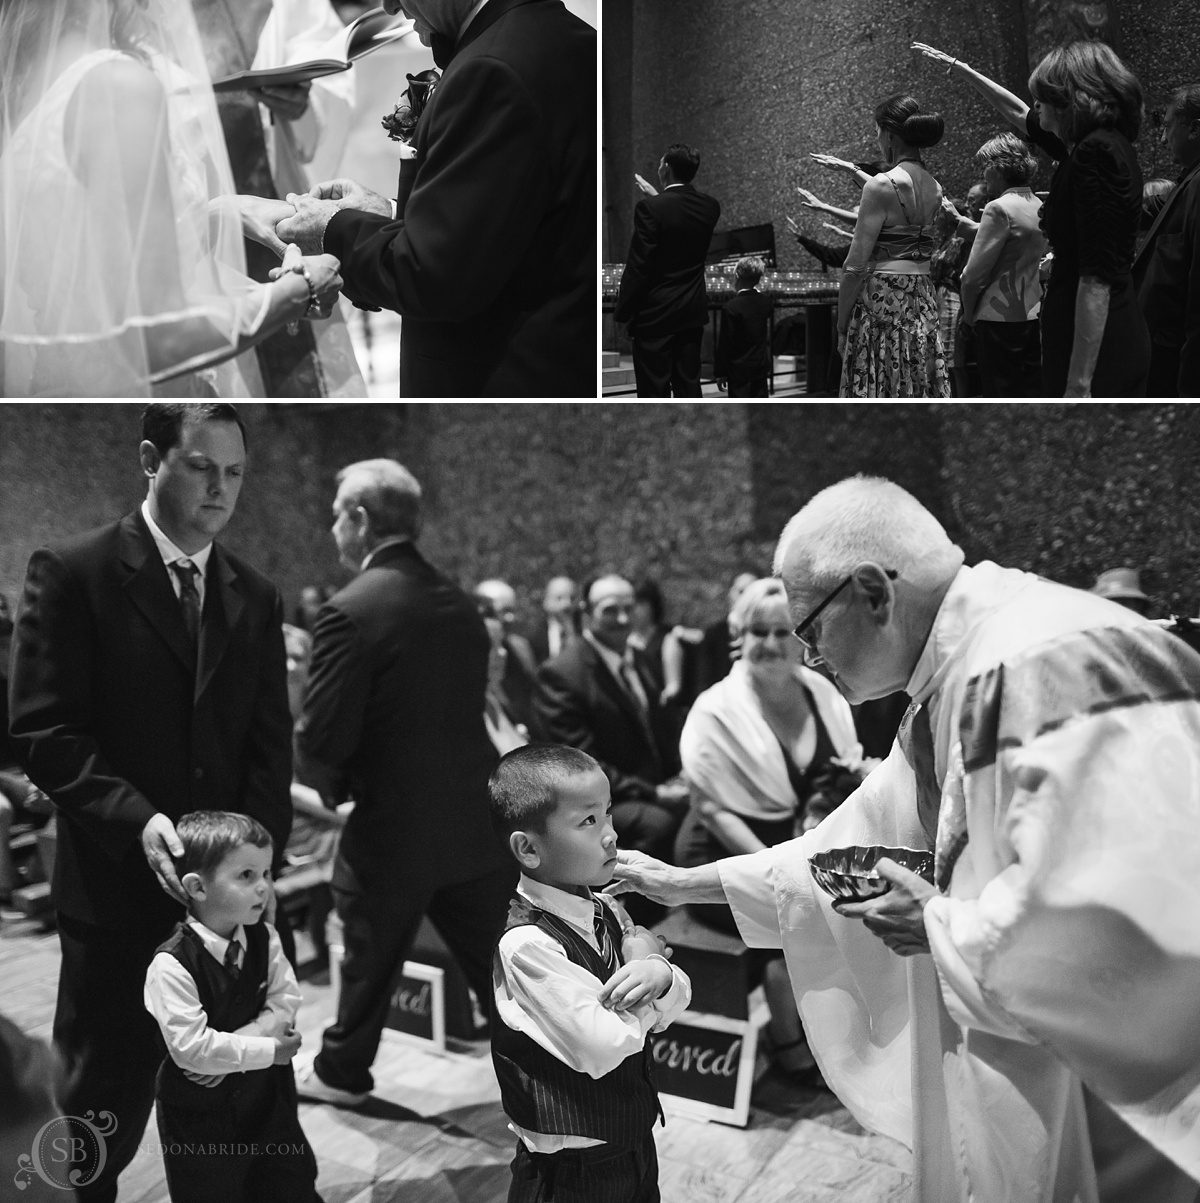 Sedona chapel wedding ~ Anita and Armand's wedding in Sedona - Communion taking place during this Sedona chapel wedding.